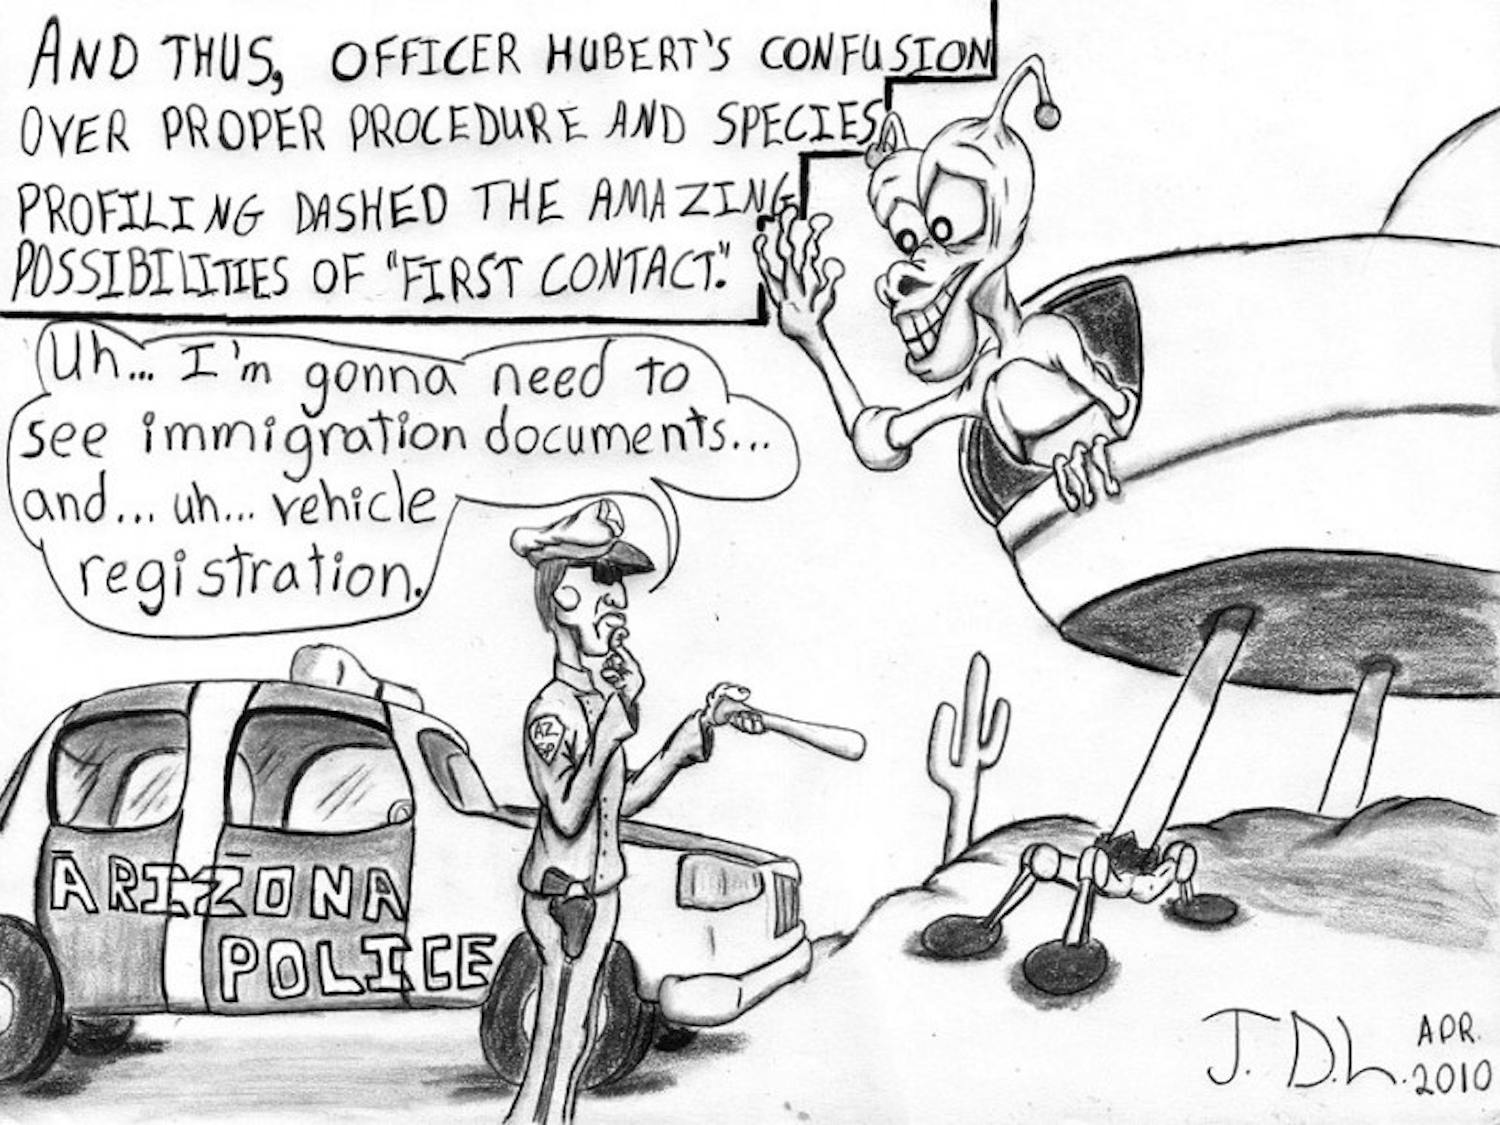 Editorial Cartoon: April 27, 2010